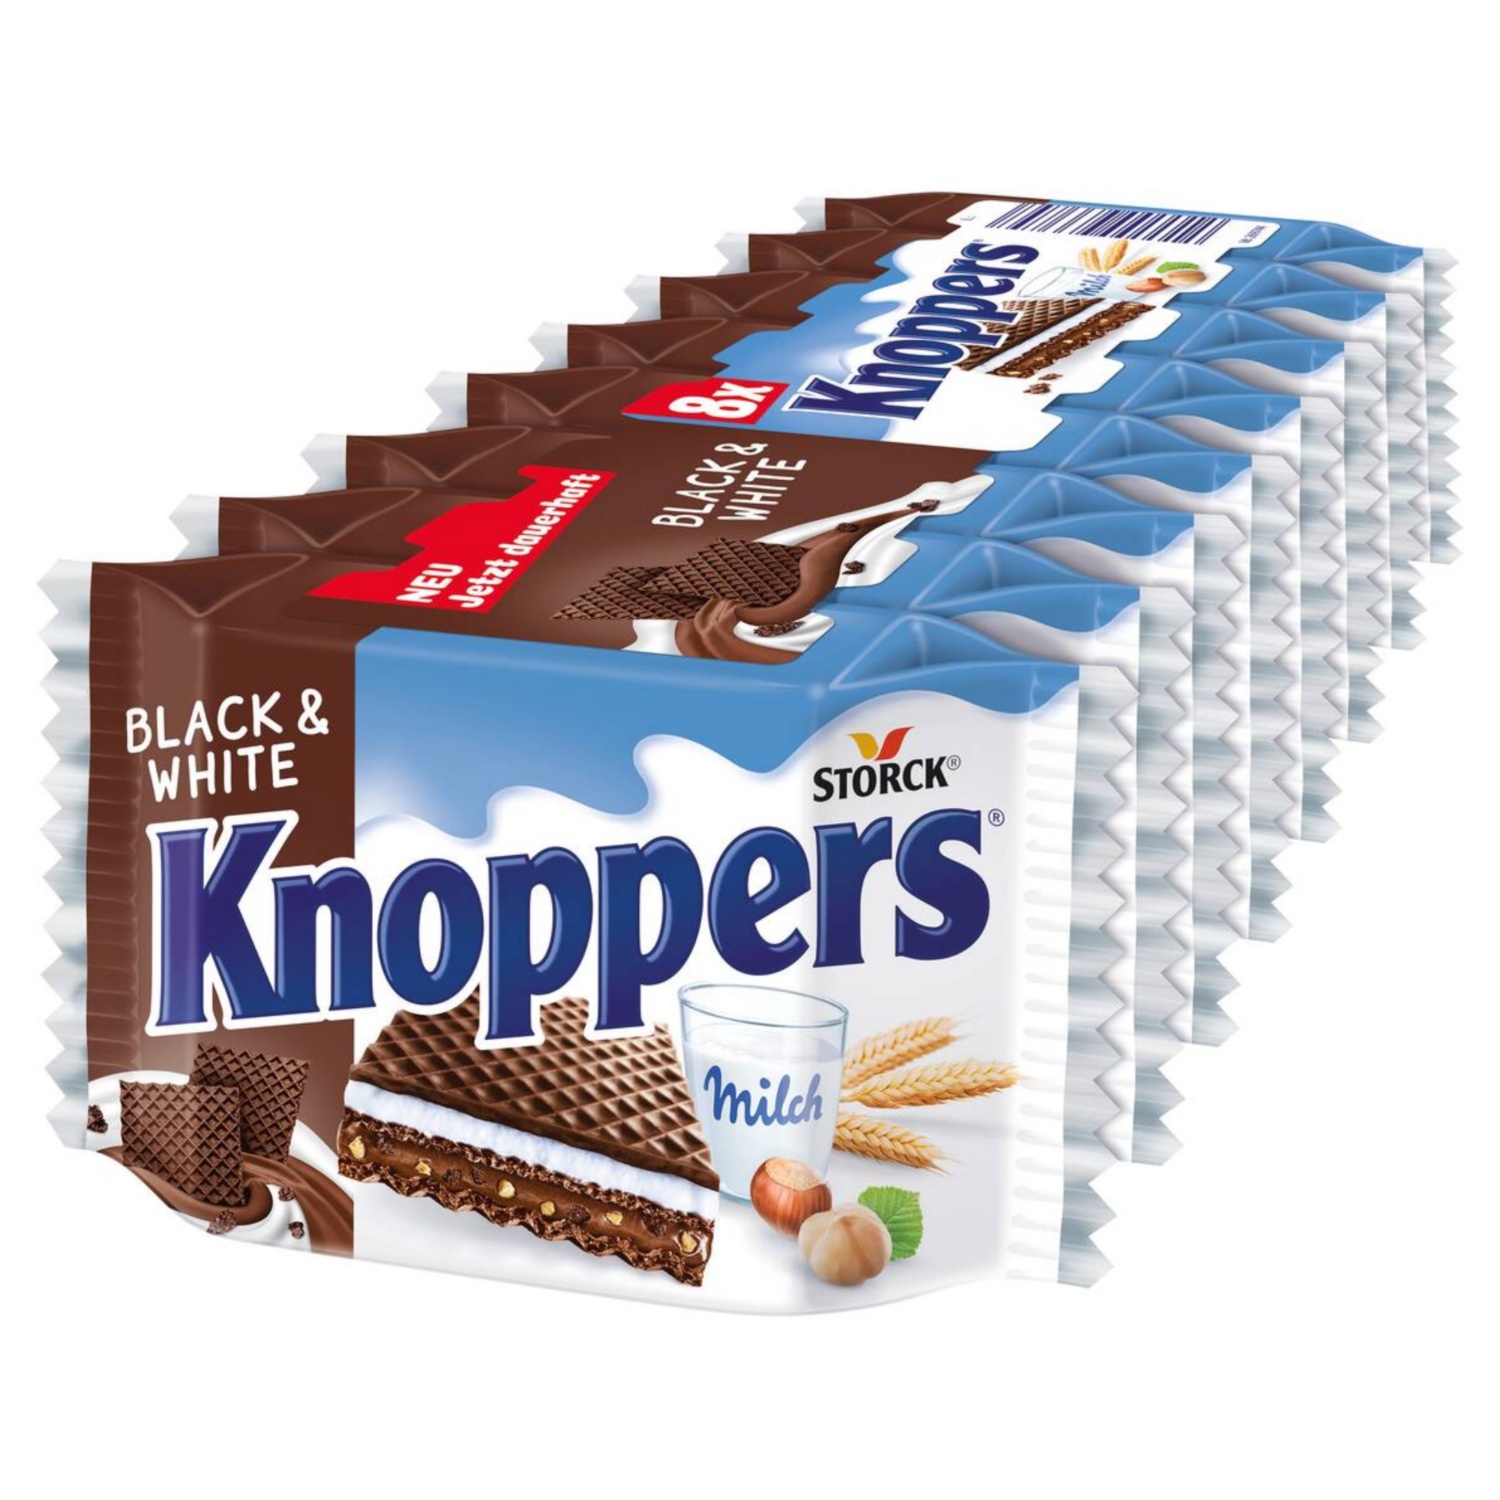 Knoppers. Кноперс. Вафли knoppers Stork 200гр. Вафля Storck knoppers jogurt, 25гр (24шт). Кнопперс ригель.